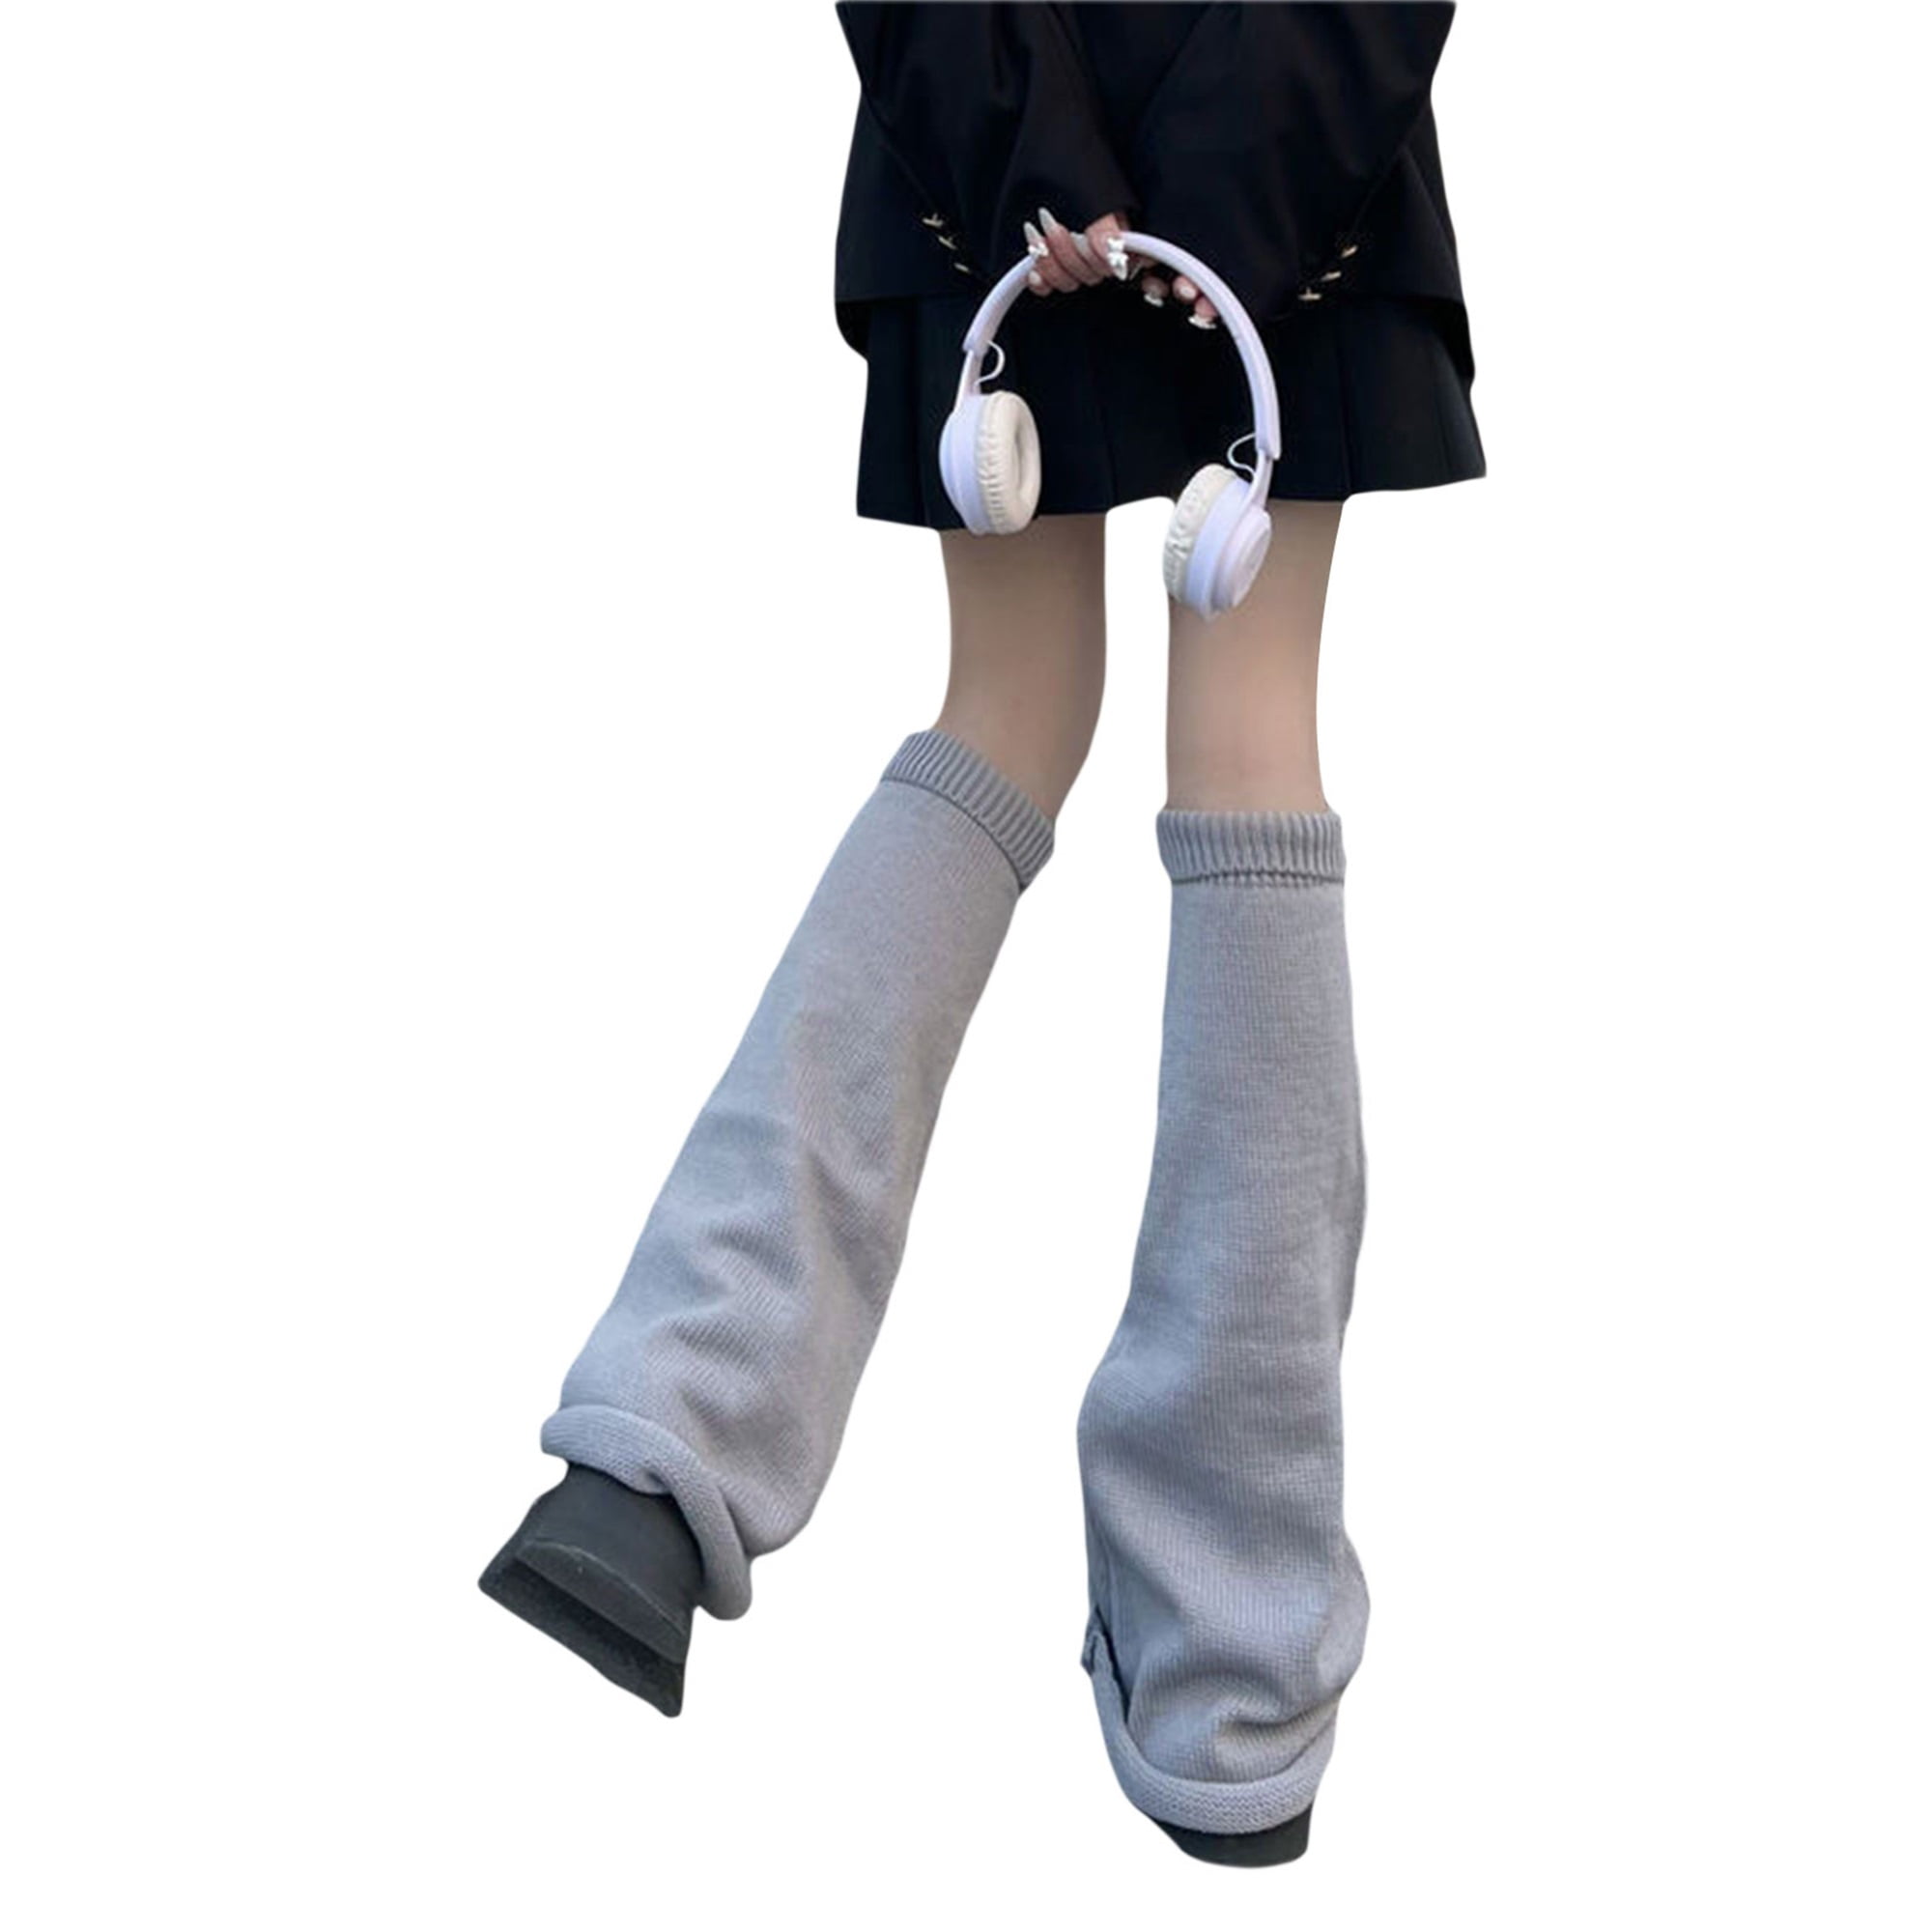 FOCUSNORM Women's Cable Knit Leg Warmers Knitted Long Socks Leg Warmer Goth  Crochet Boot Socks